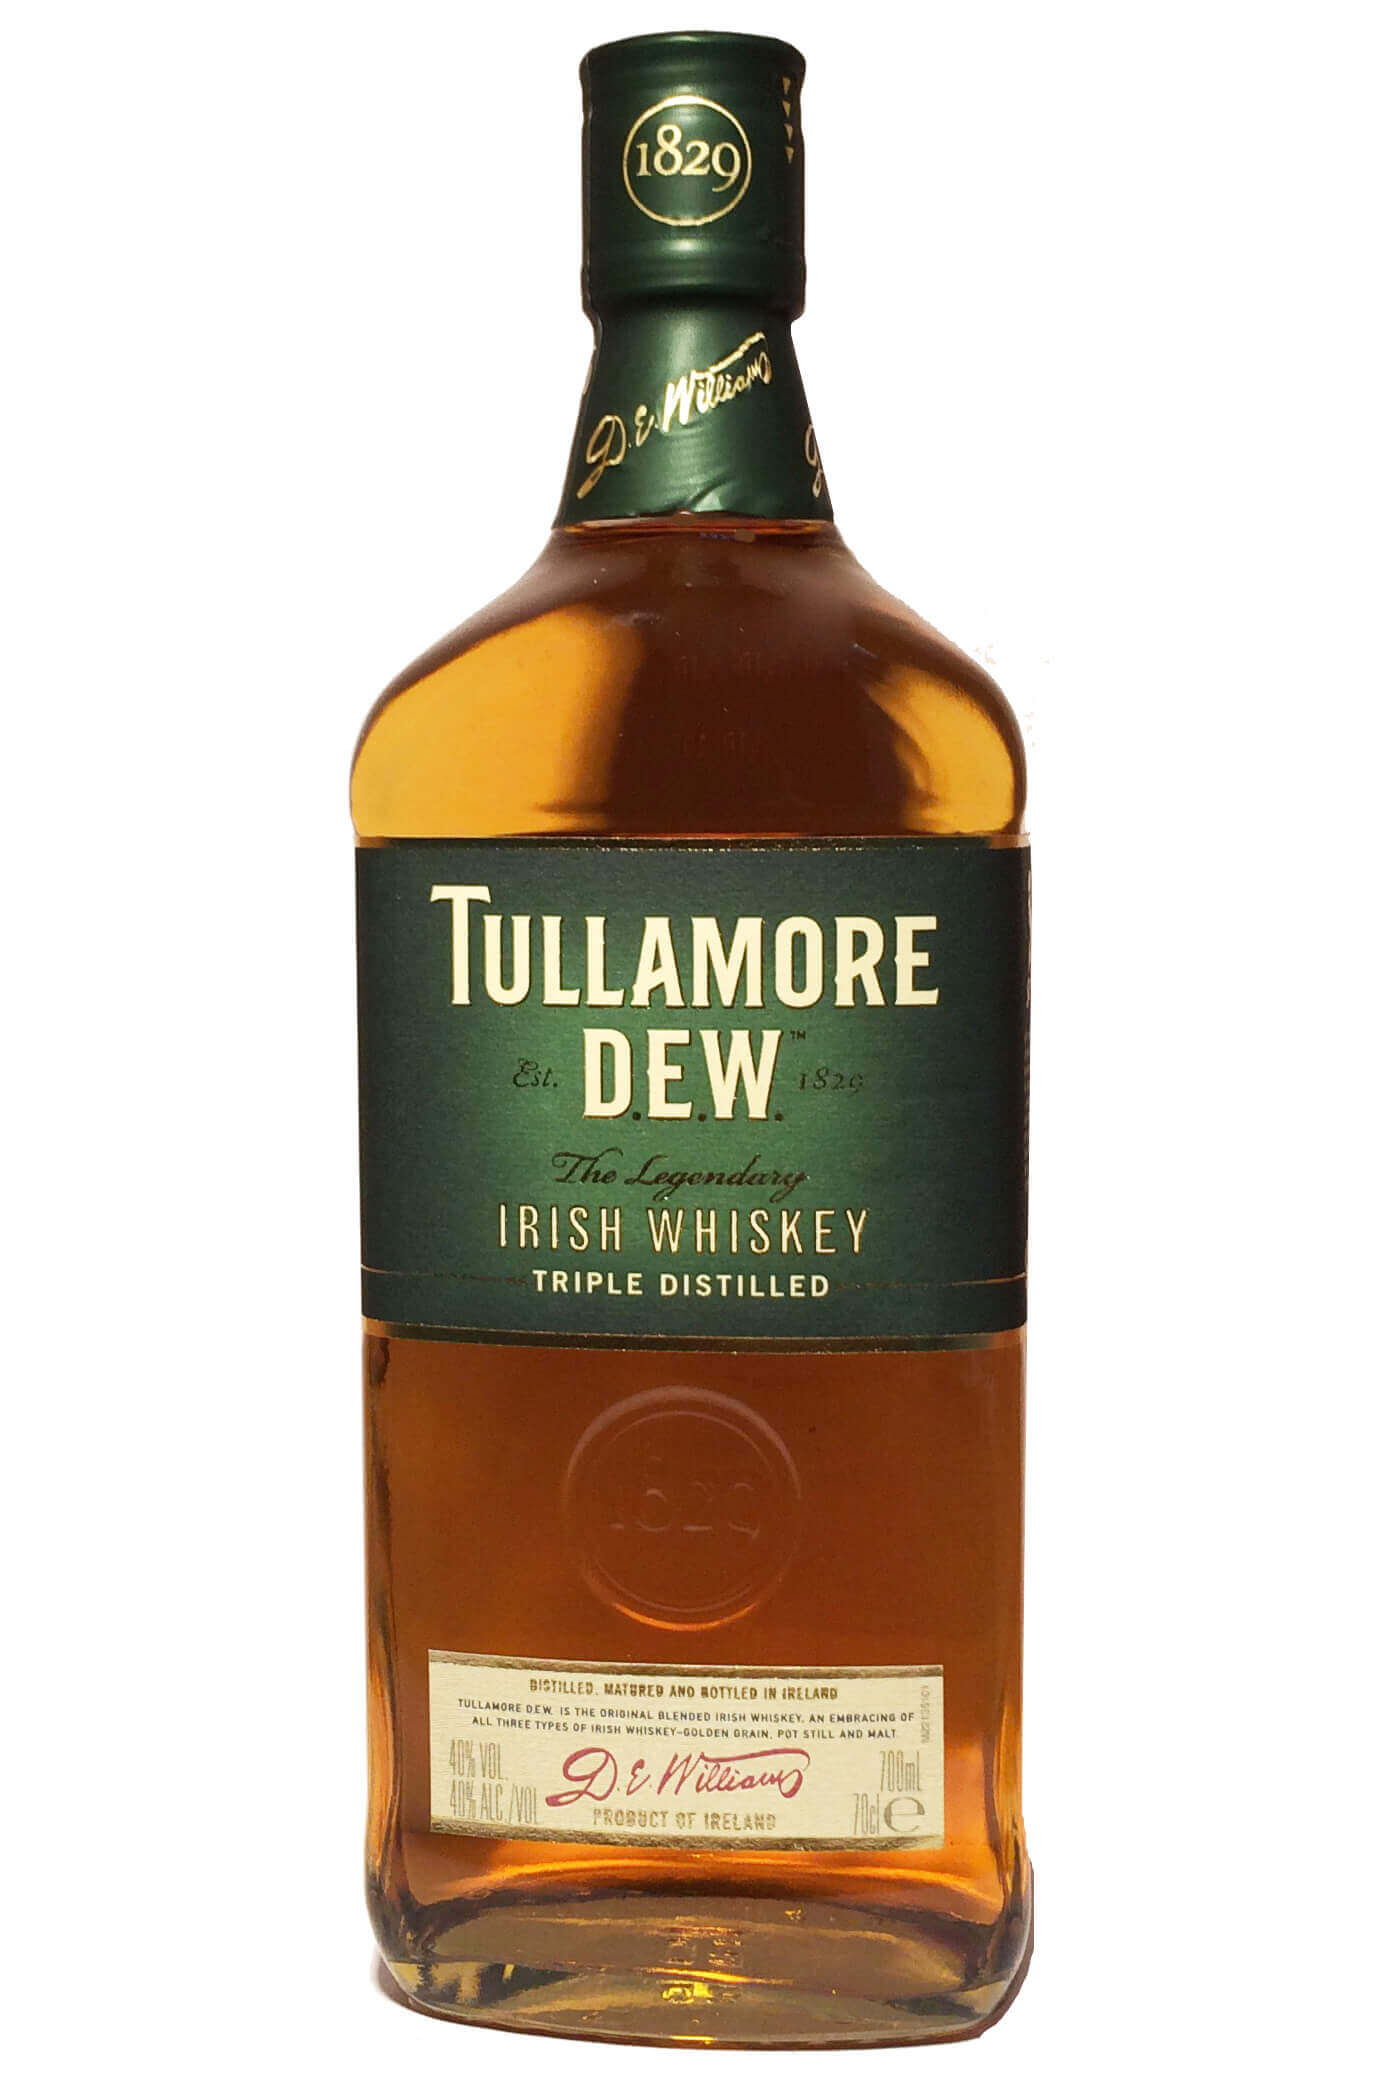 Tullamore dew 0.7 цена. Виски Тулламоре 0.7. Талмор Дью 0.7. Tullamore Dew Irish Whiskey. Tullamore Dew 0.7.